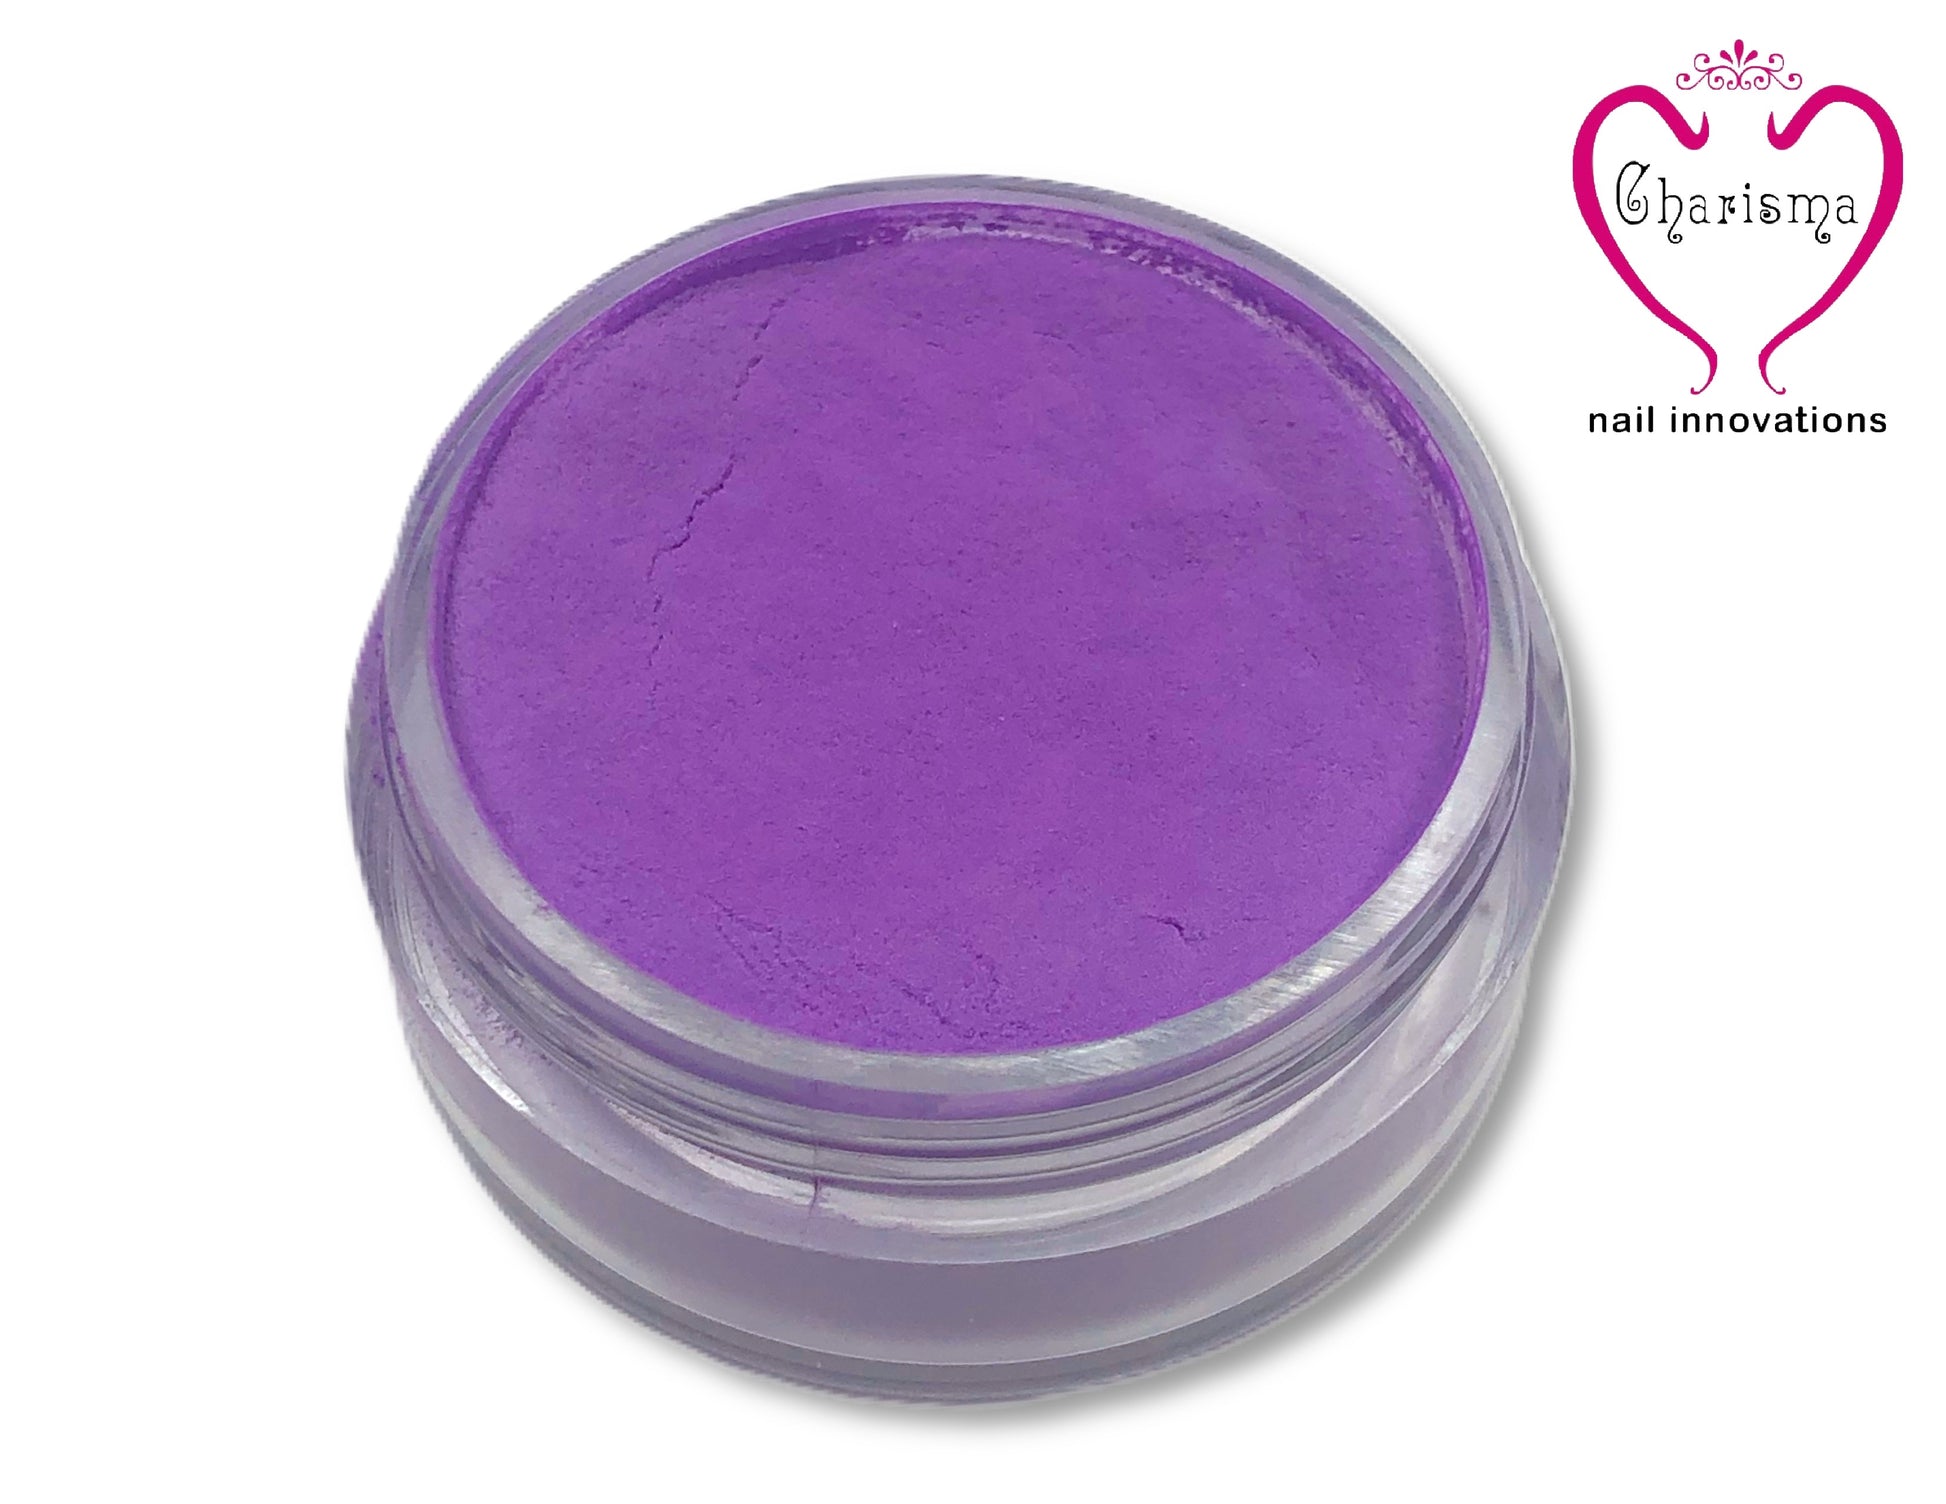 Charisma Nail Acrylic Powder - Violet - My Little Nail Art Shop